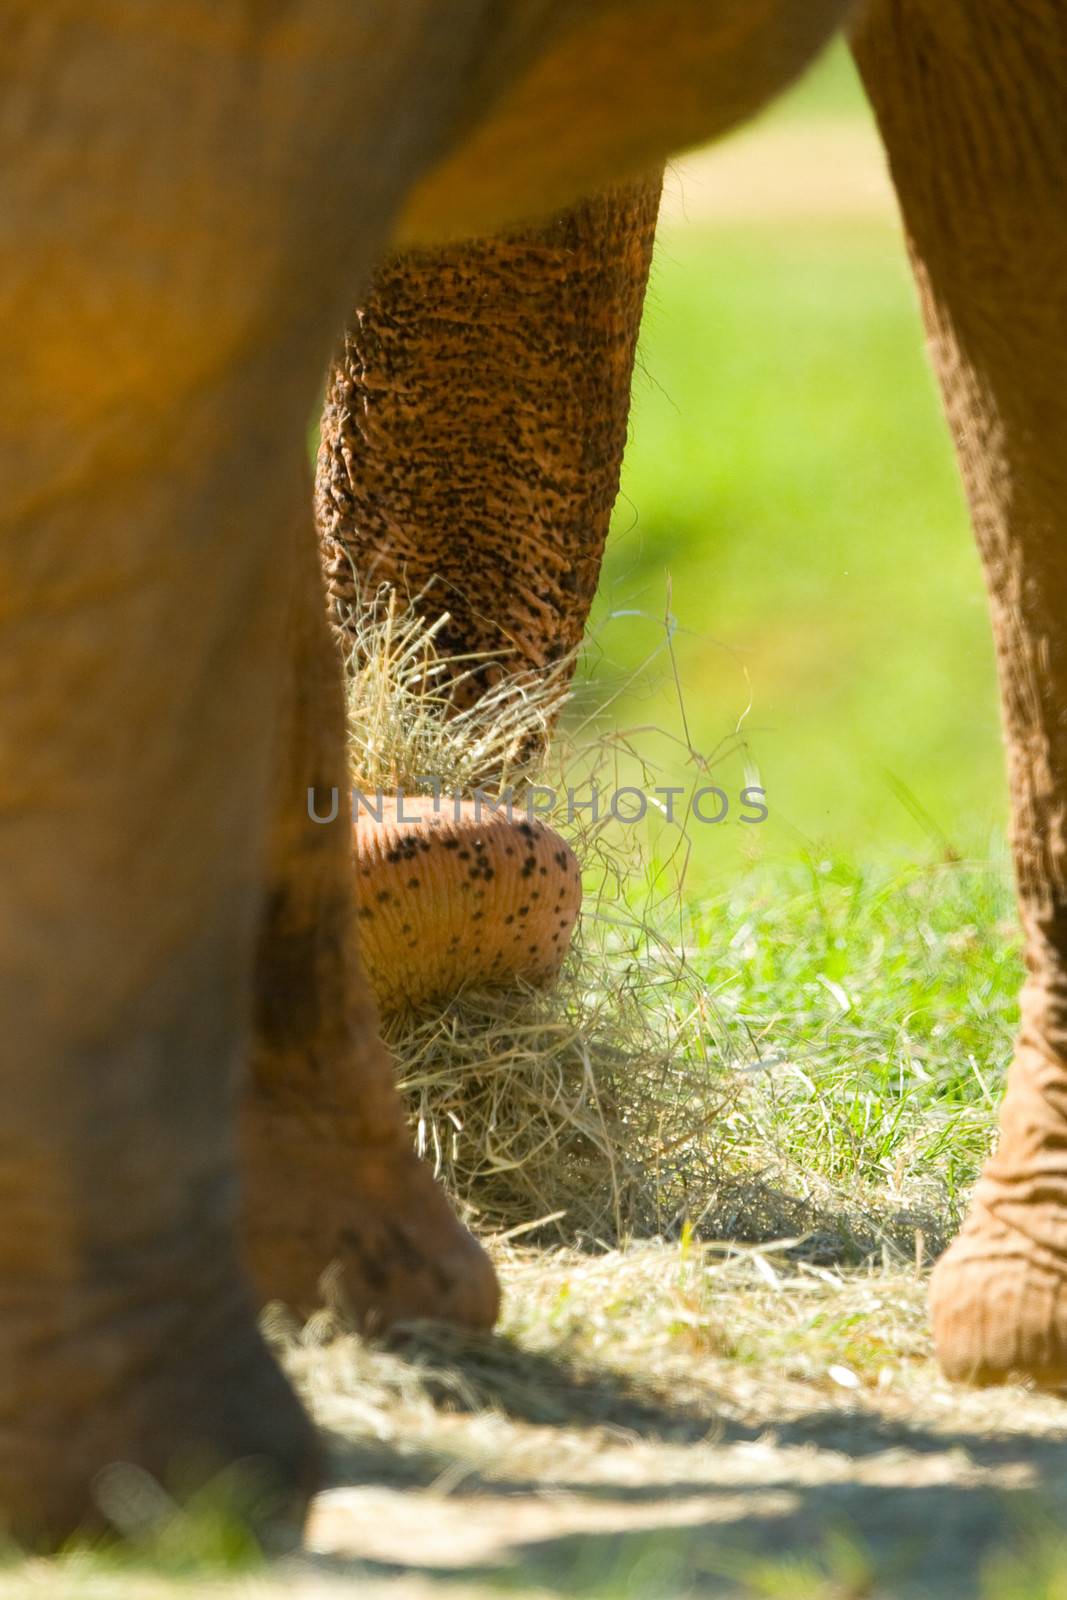 African elephant by CelsoDiniz